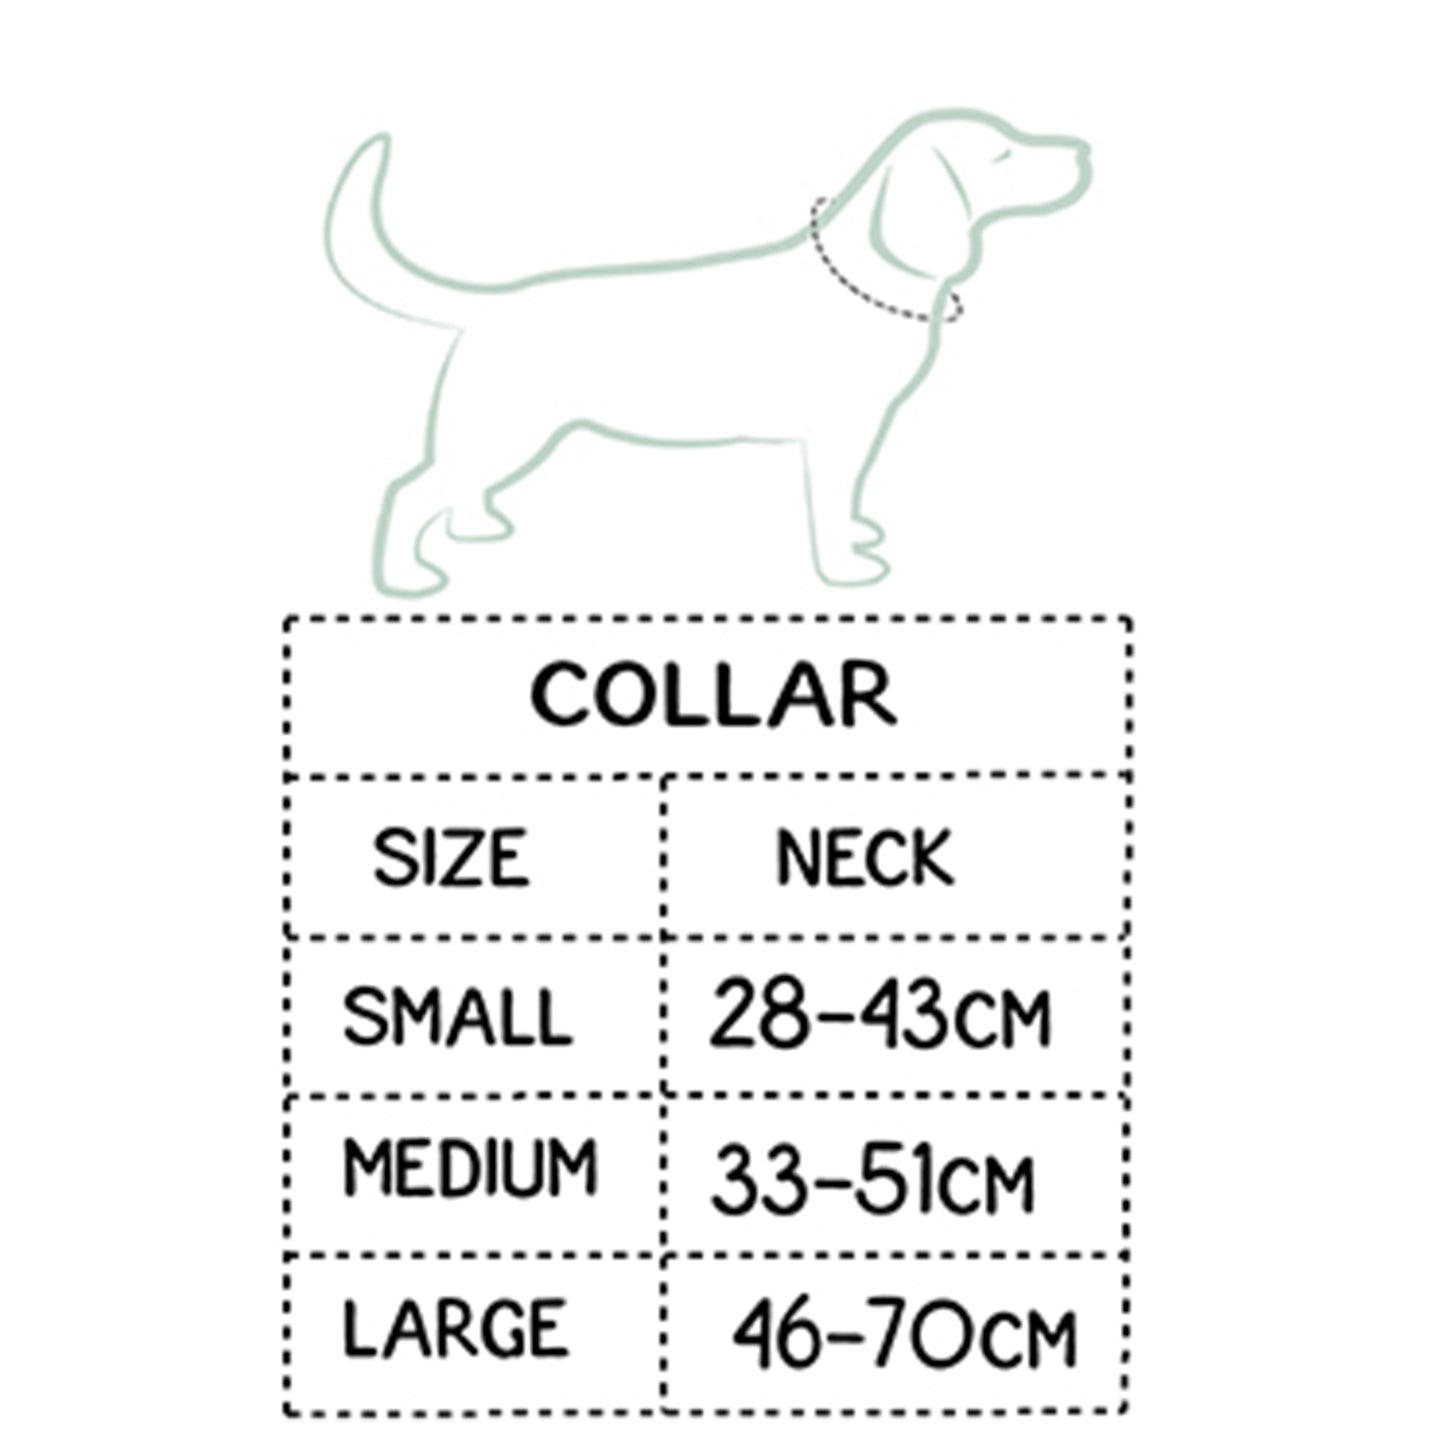 Dog collar size chart guide